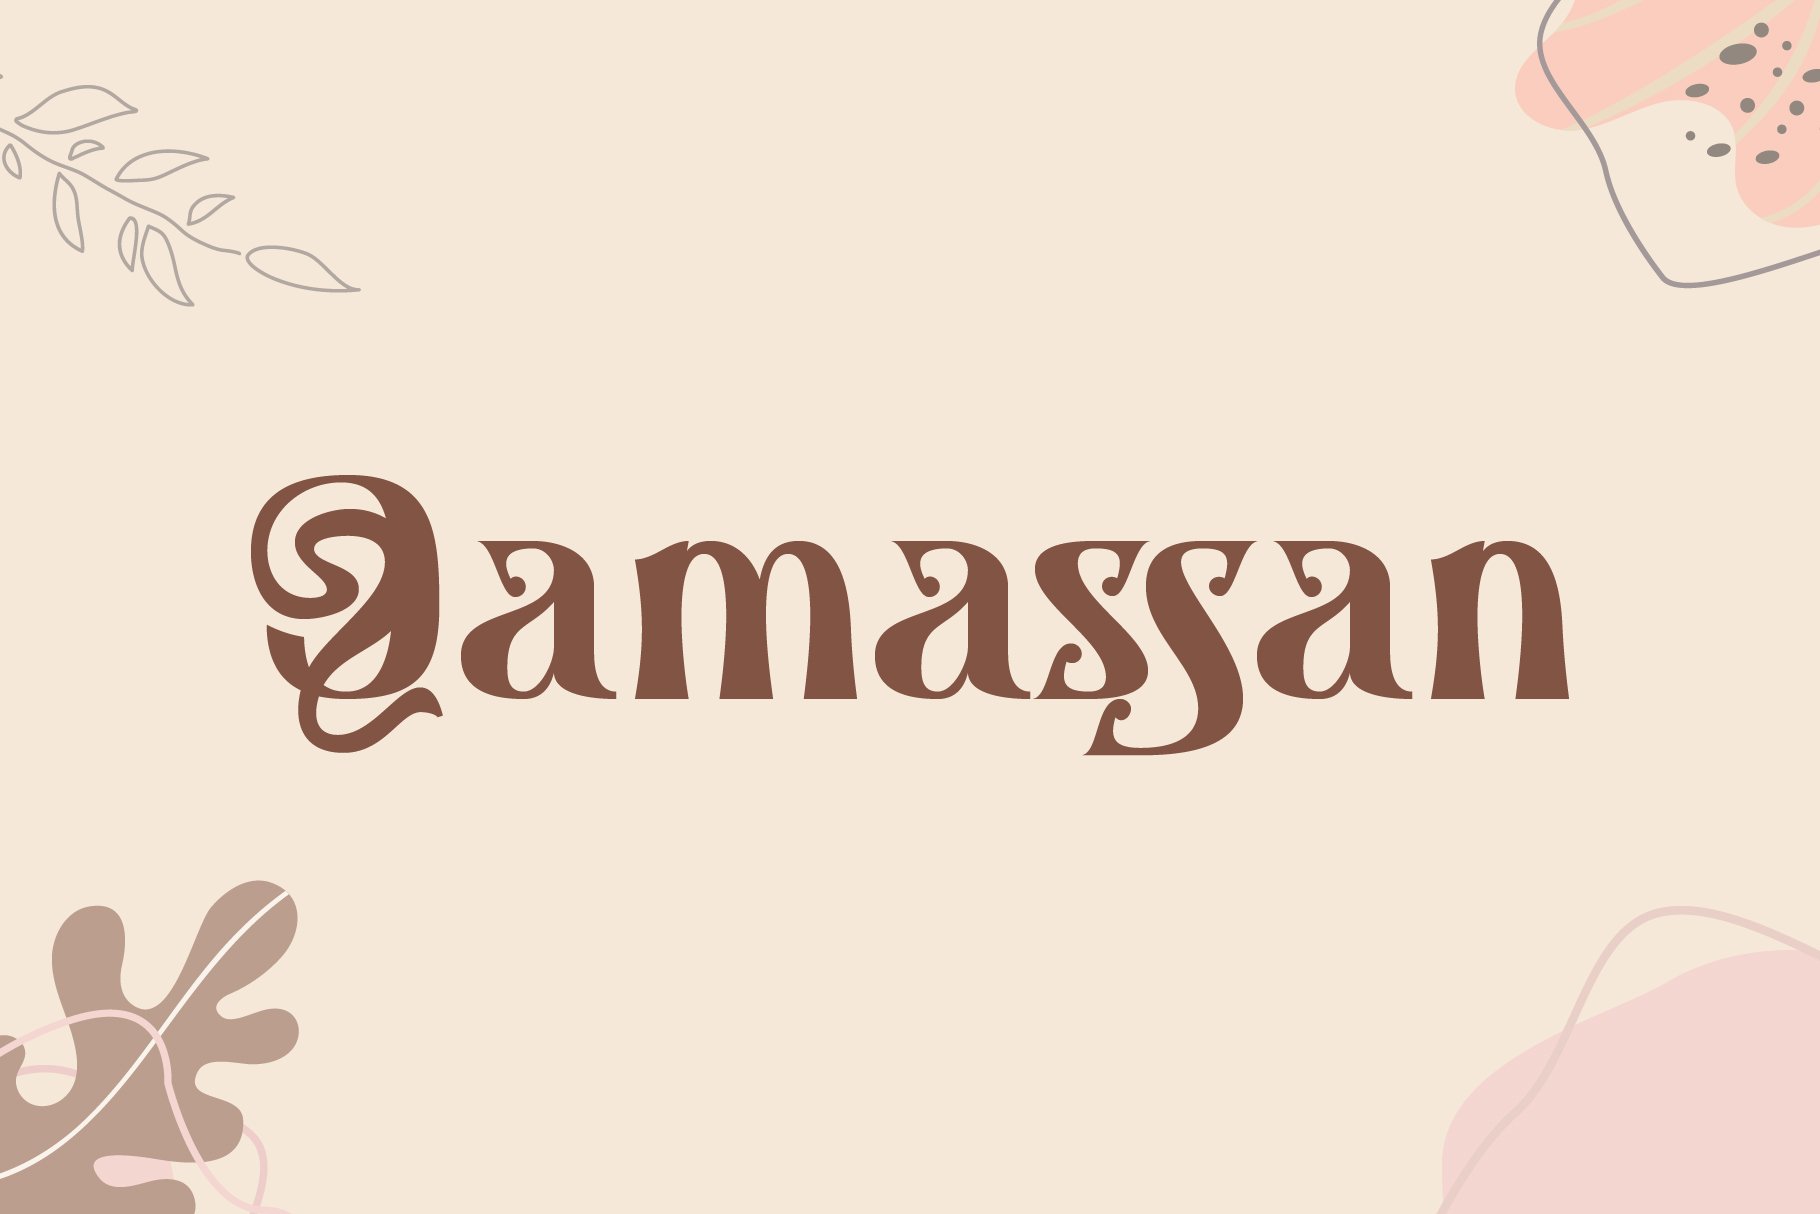 Qamassan Luxury Retro Vintage+BONUS cover image.